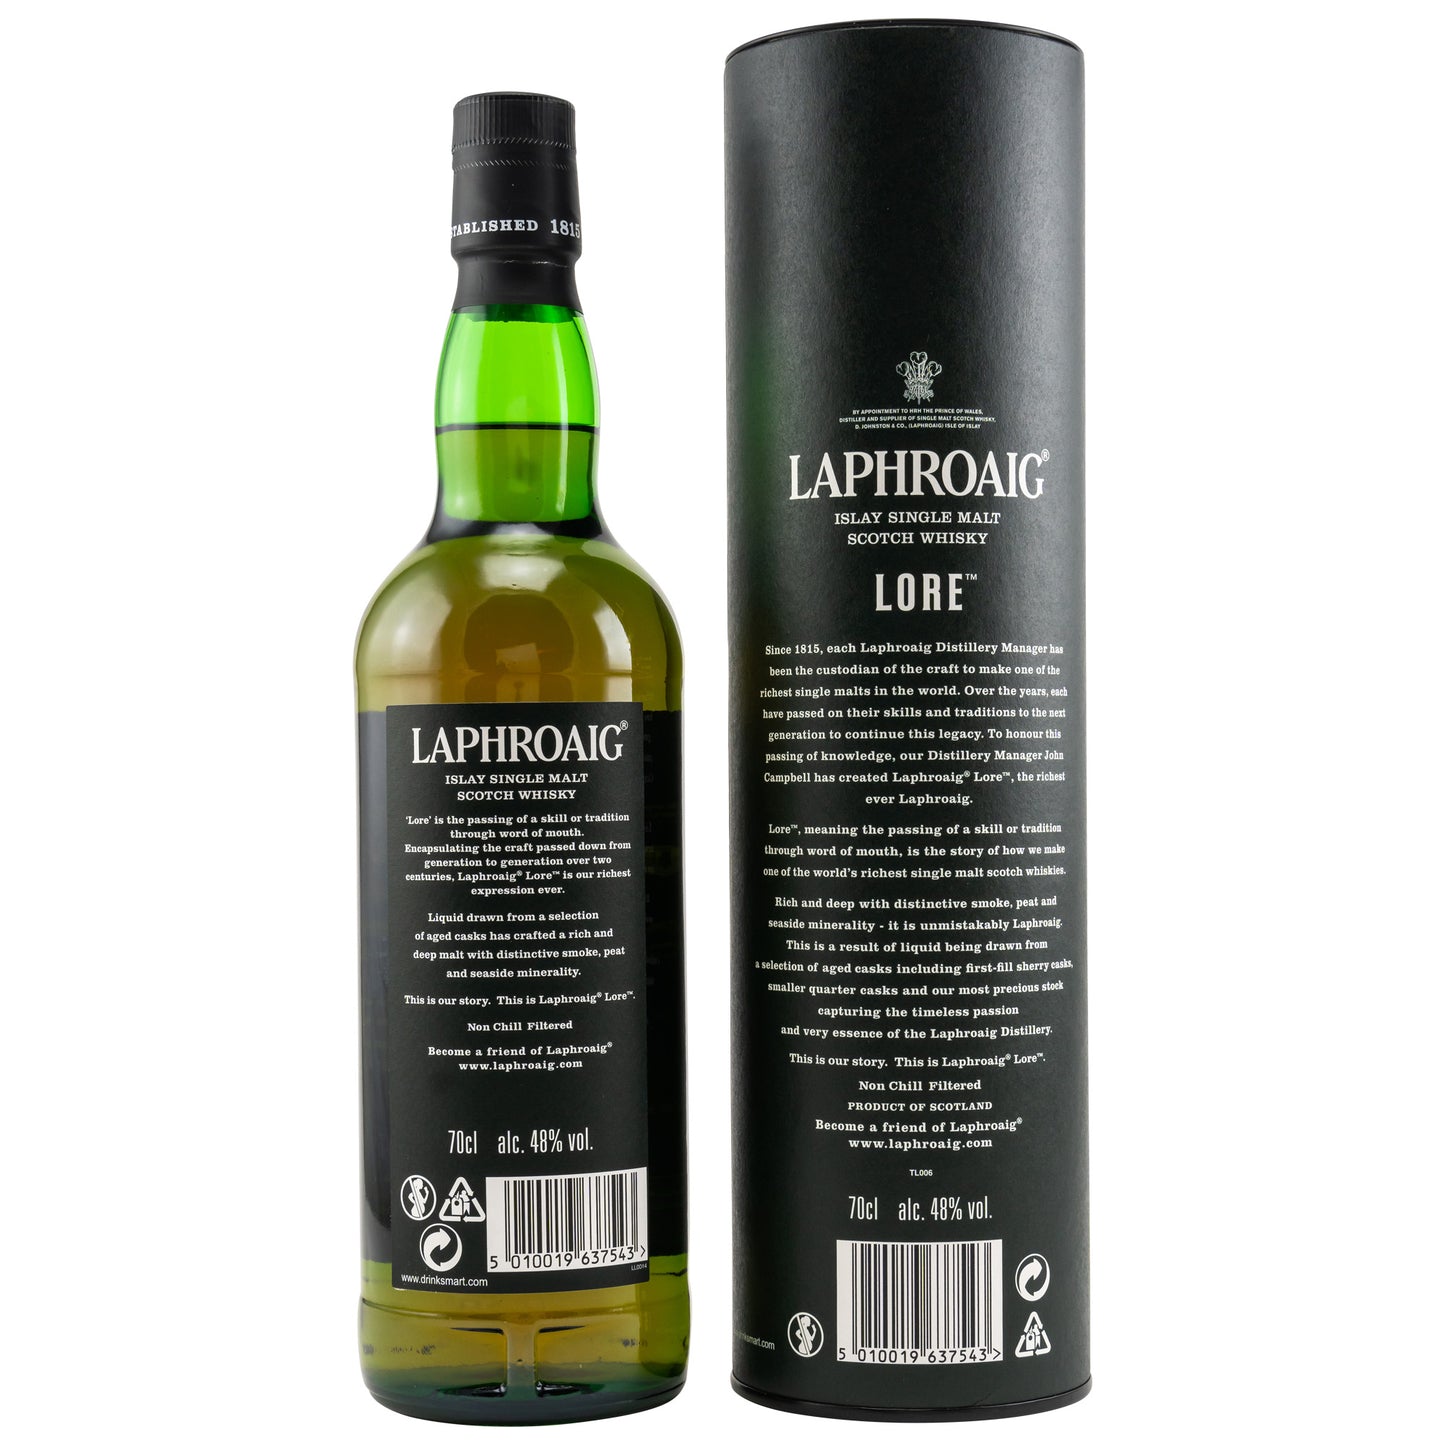 LAPHROAIG - Lore - 48% vol. - Schwarzbach Spirits